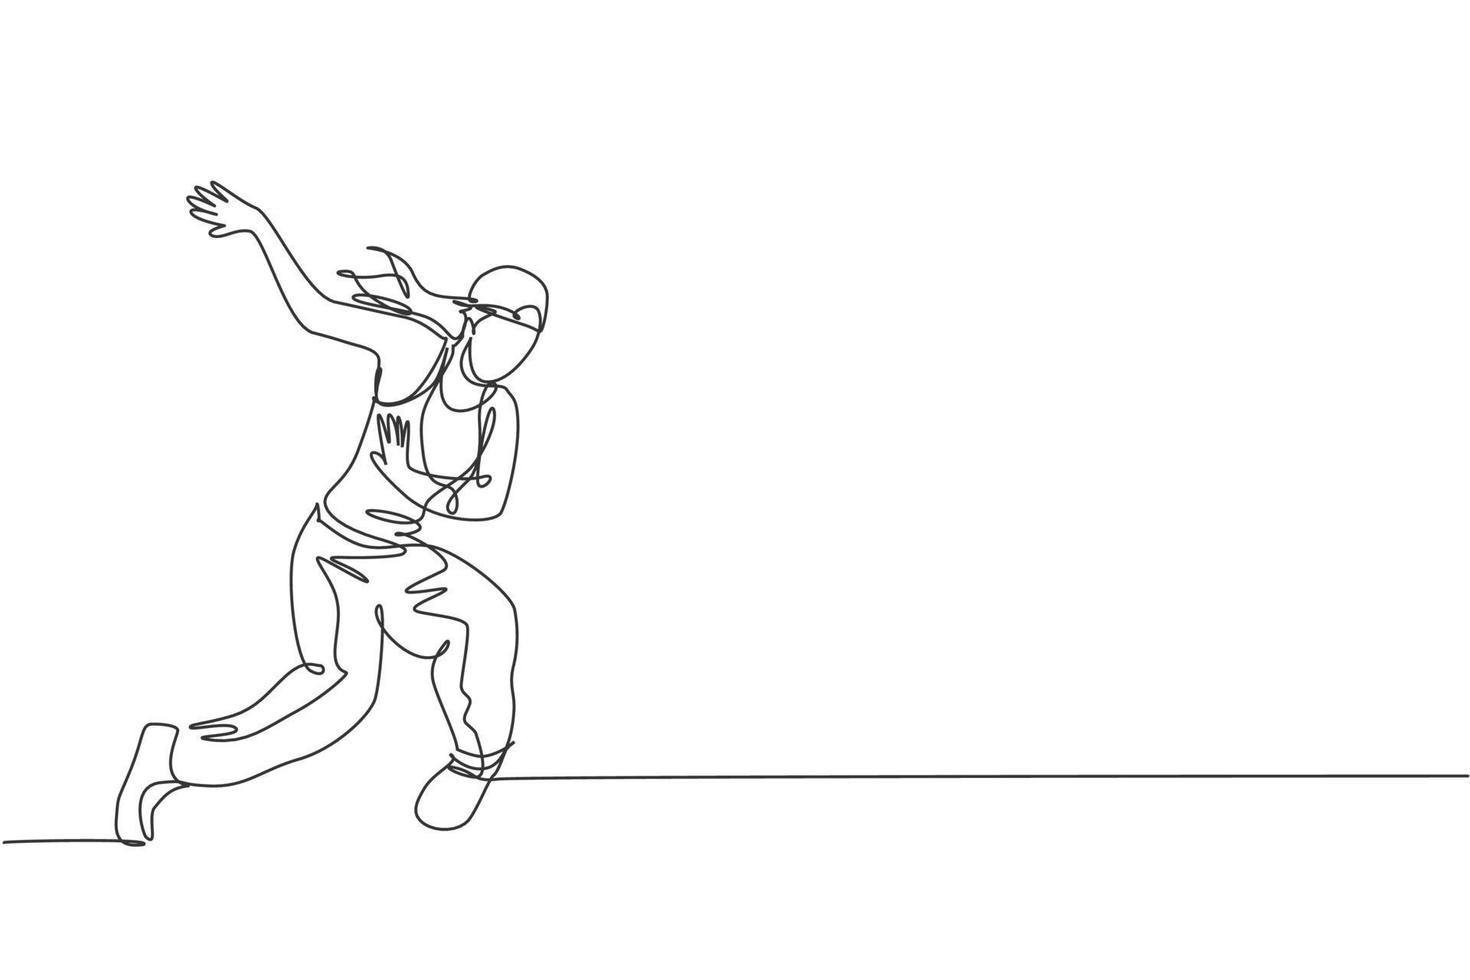 en kontinuerlig linje ritning ung sportig paus dansare kvinna med hatt visa hiphop dans stil på gatan. urban livsstil sport koncept. dynamisk enkel linje rita design vektor grafisk illustration